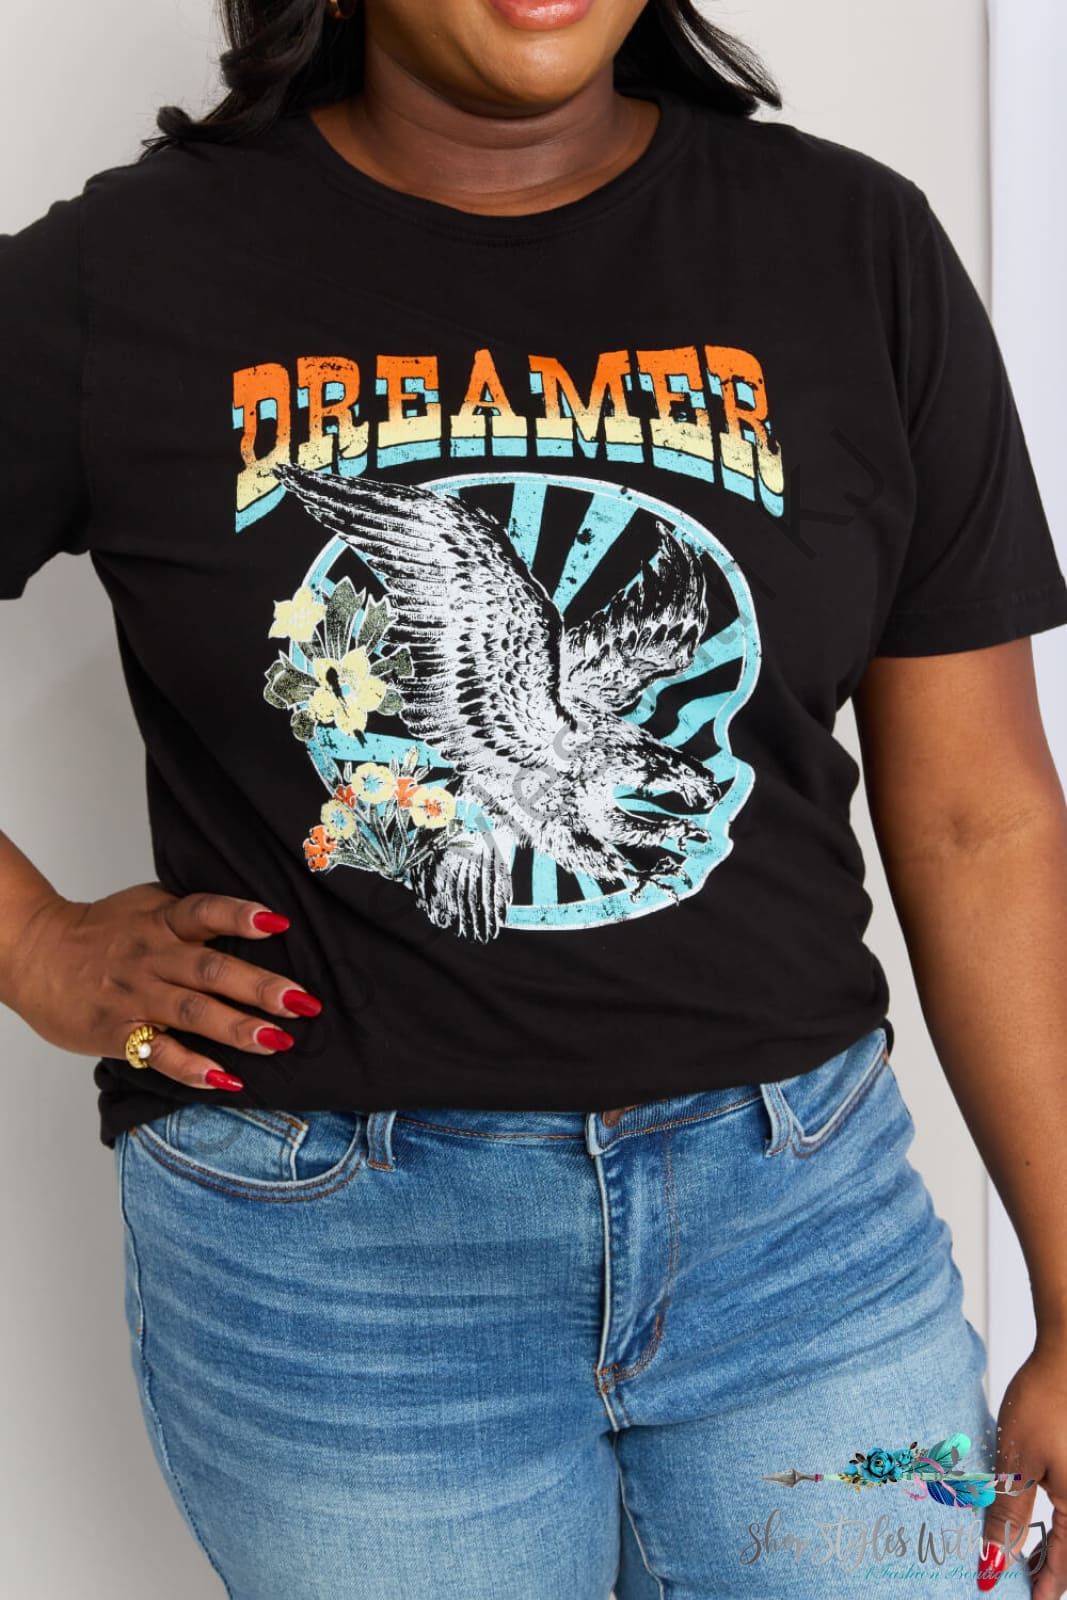 Dreamer Graphic T-Shirt Shirts & Tops